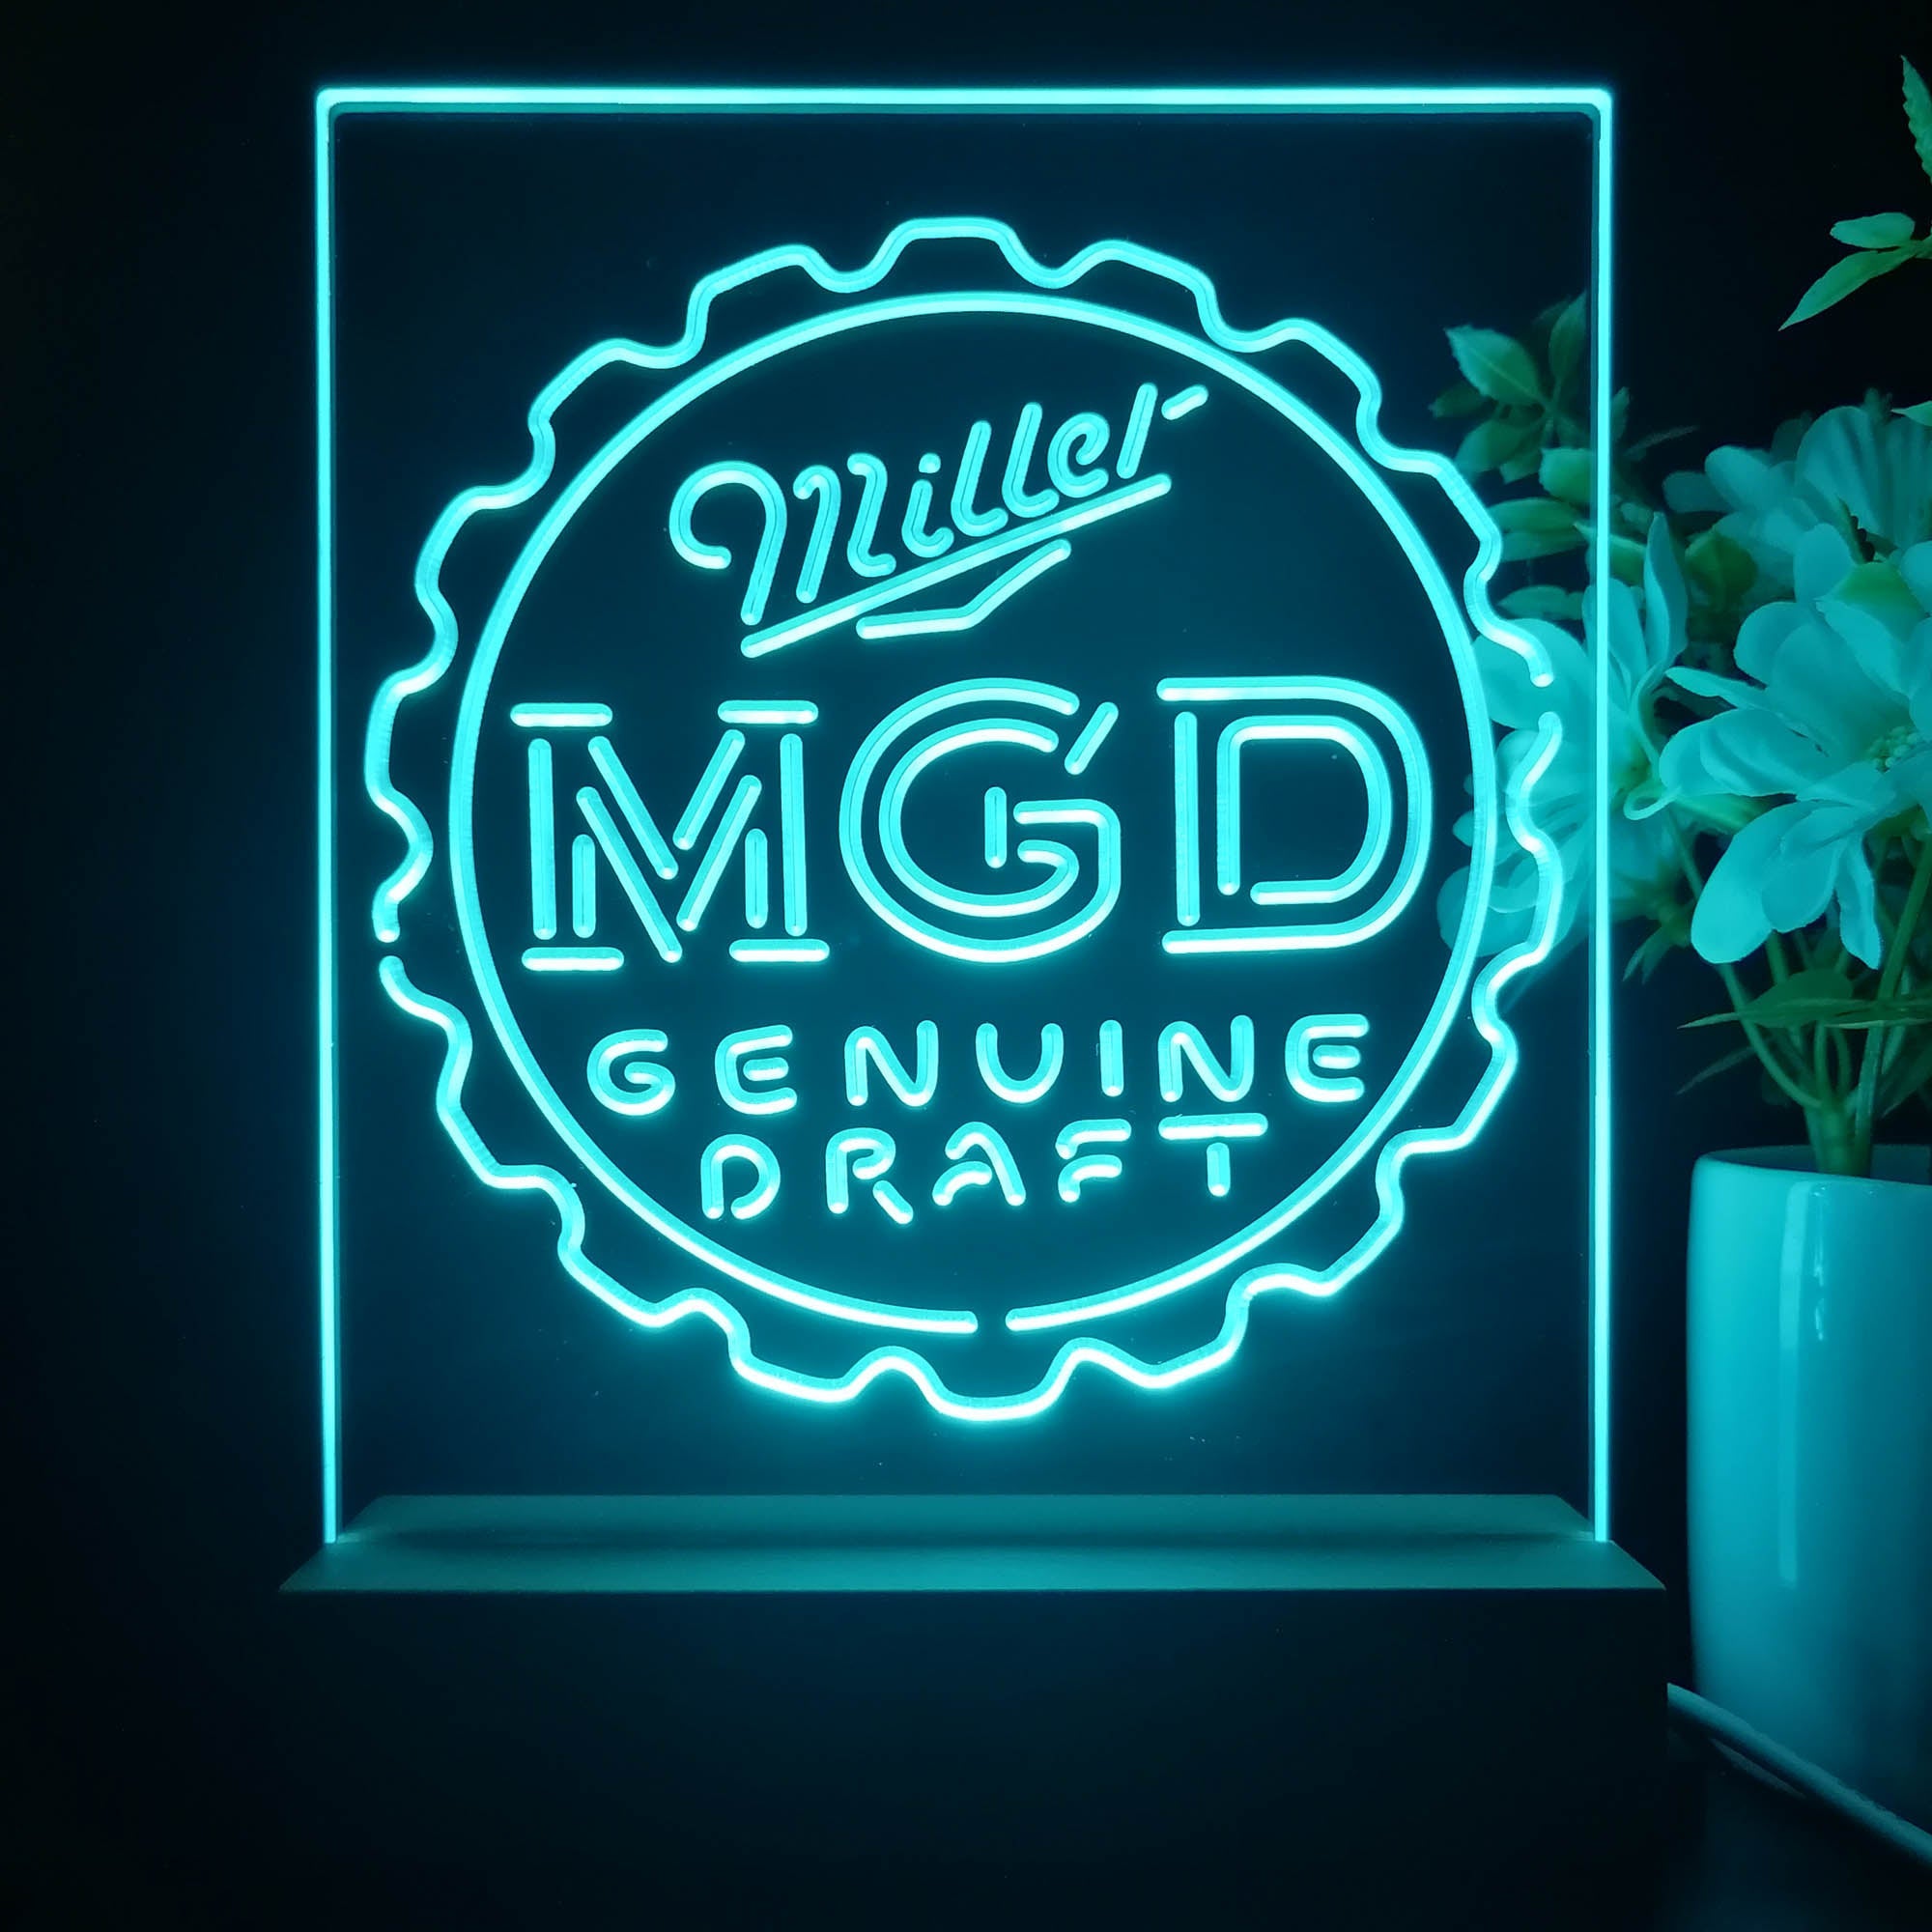 Miller Genuine Draft MGD 3D Illusion Night Light Desk Lamp